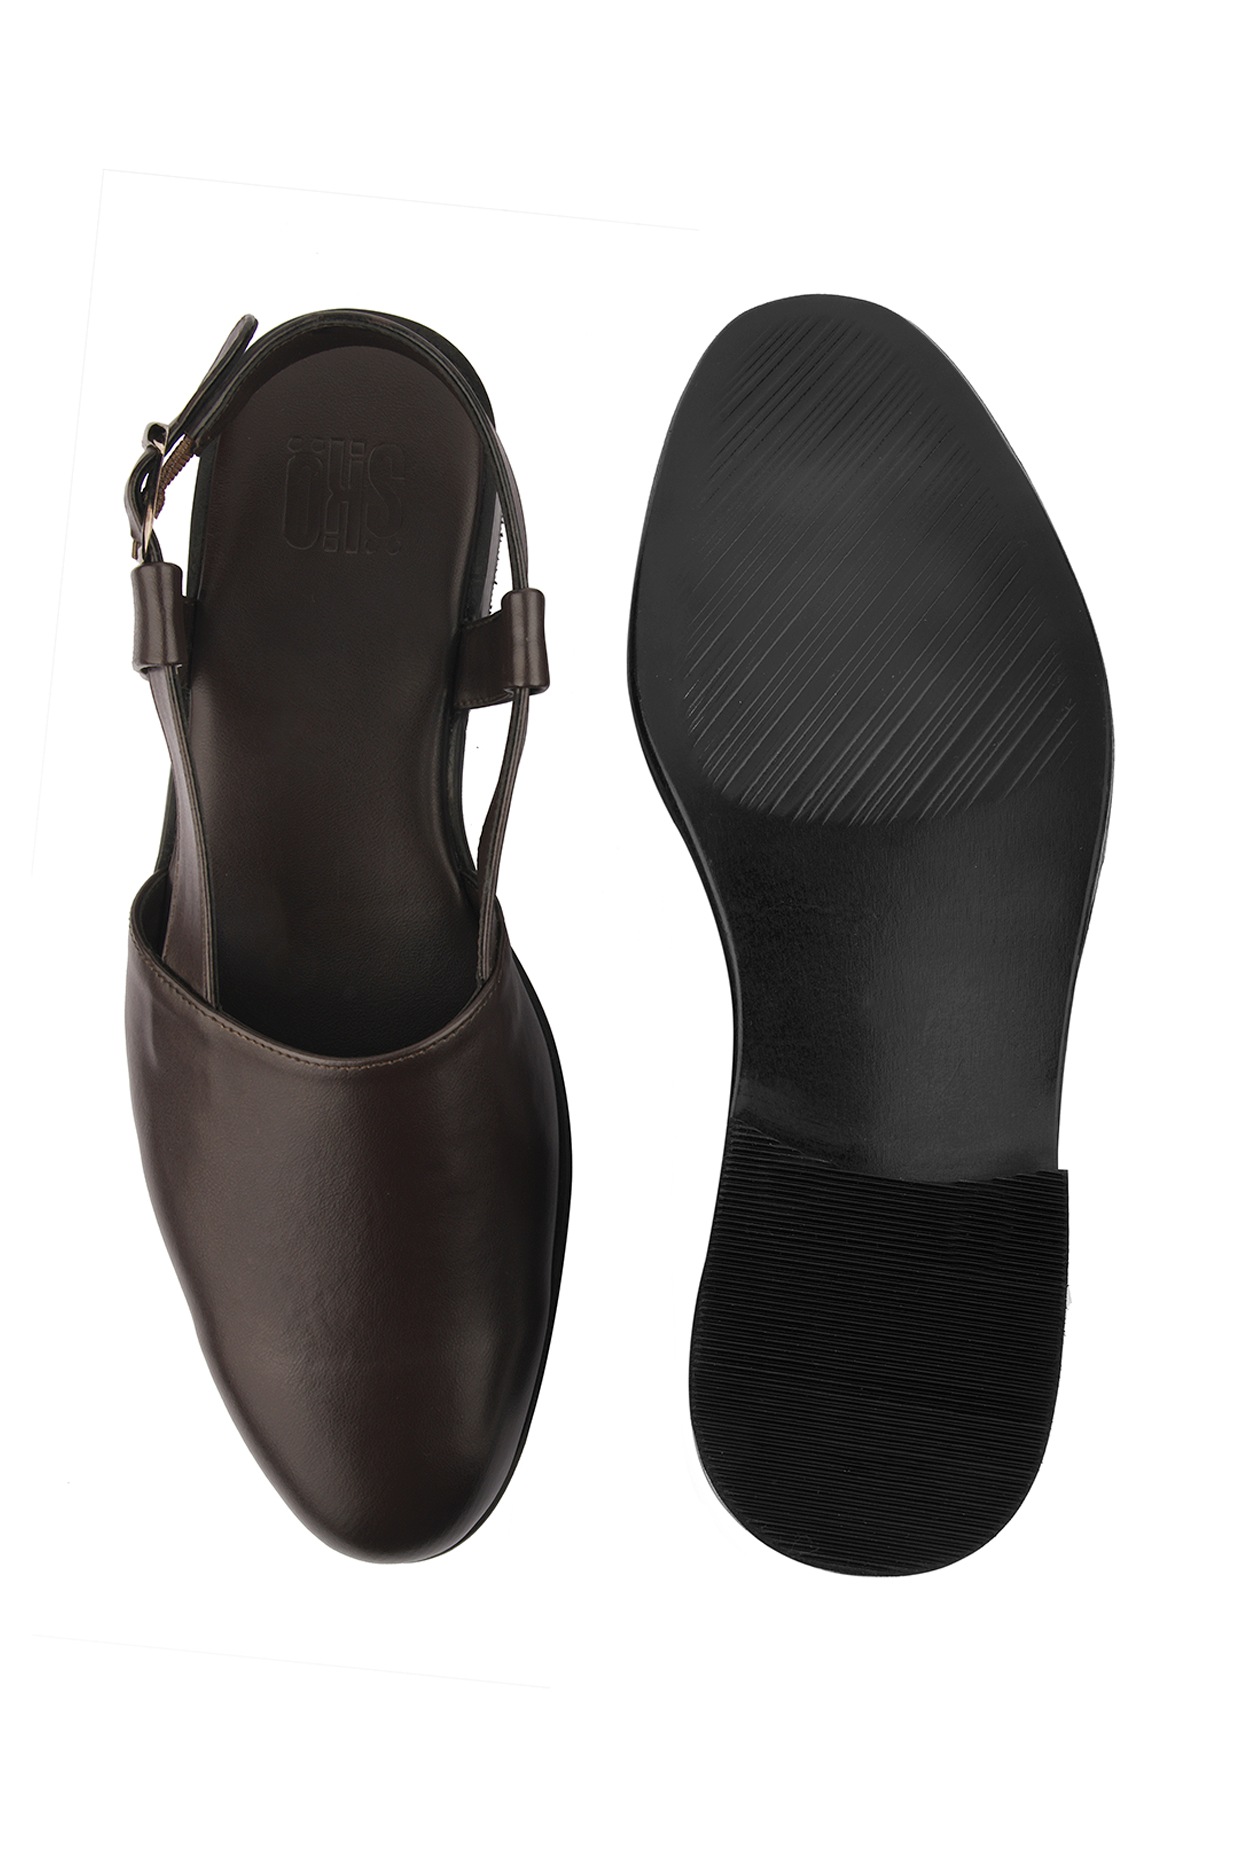 Friends Footwear Men's Peshawari Sandal Juttis(2304_01PESBLK_06) Black :  Amazon.in: Shoes & Handbags